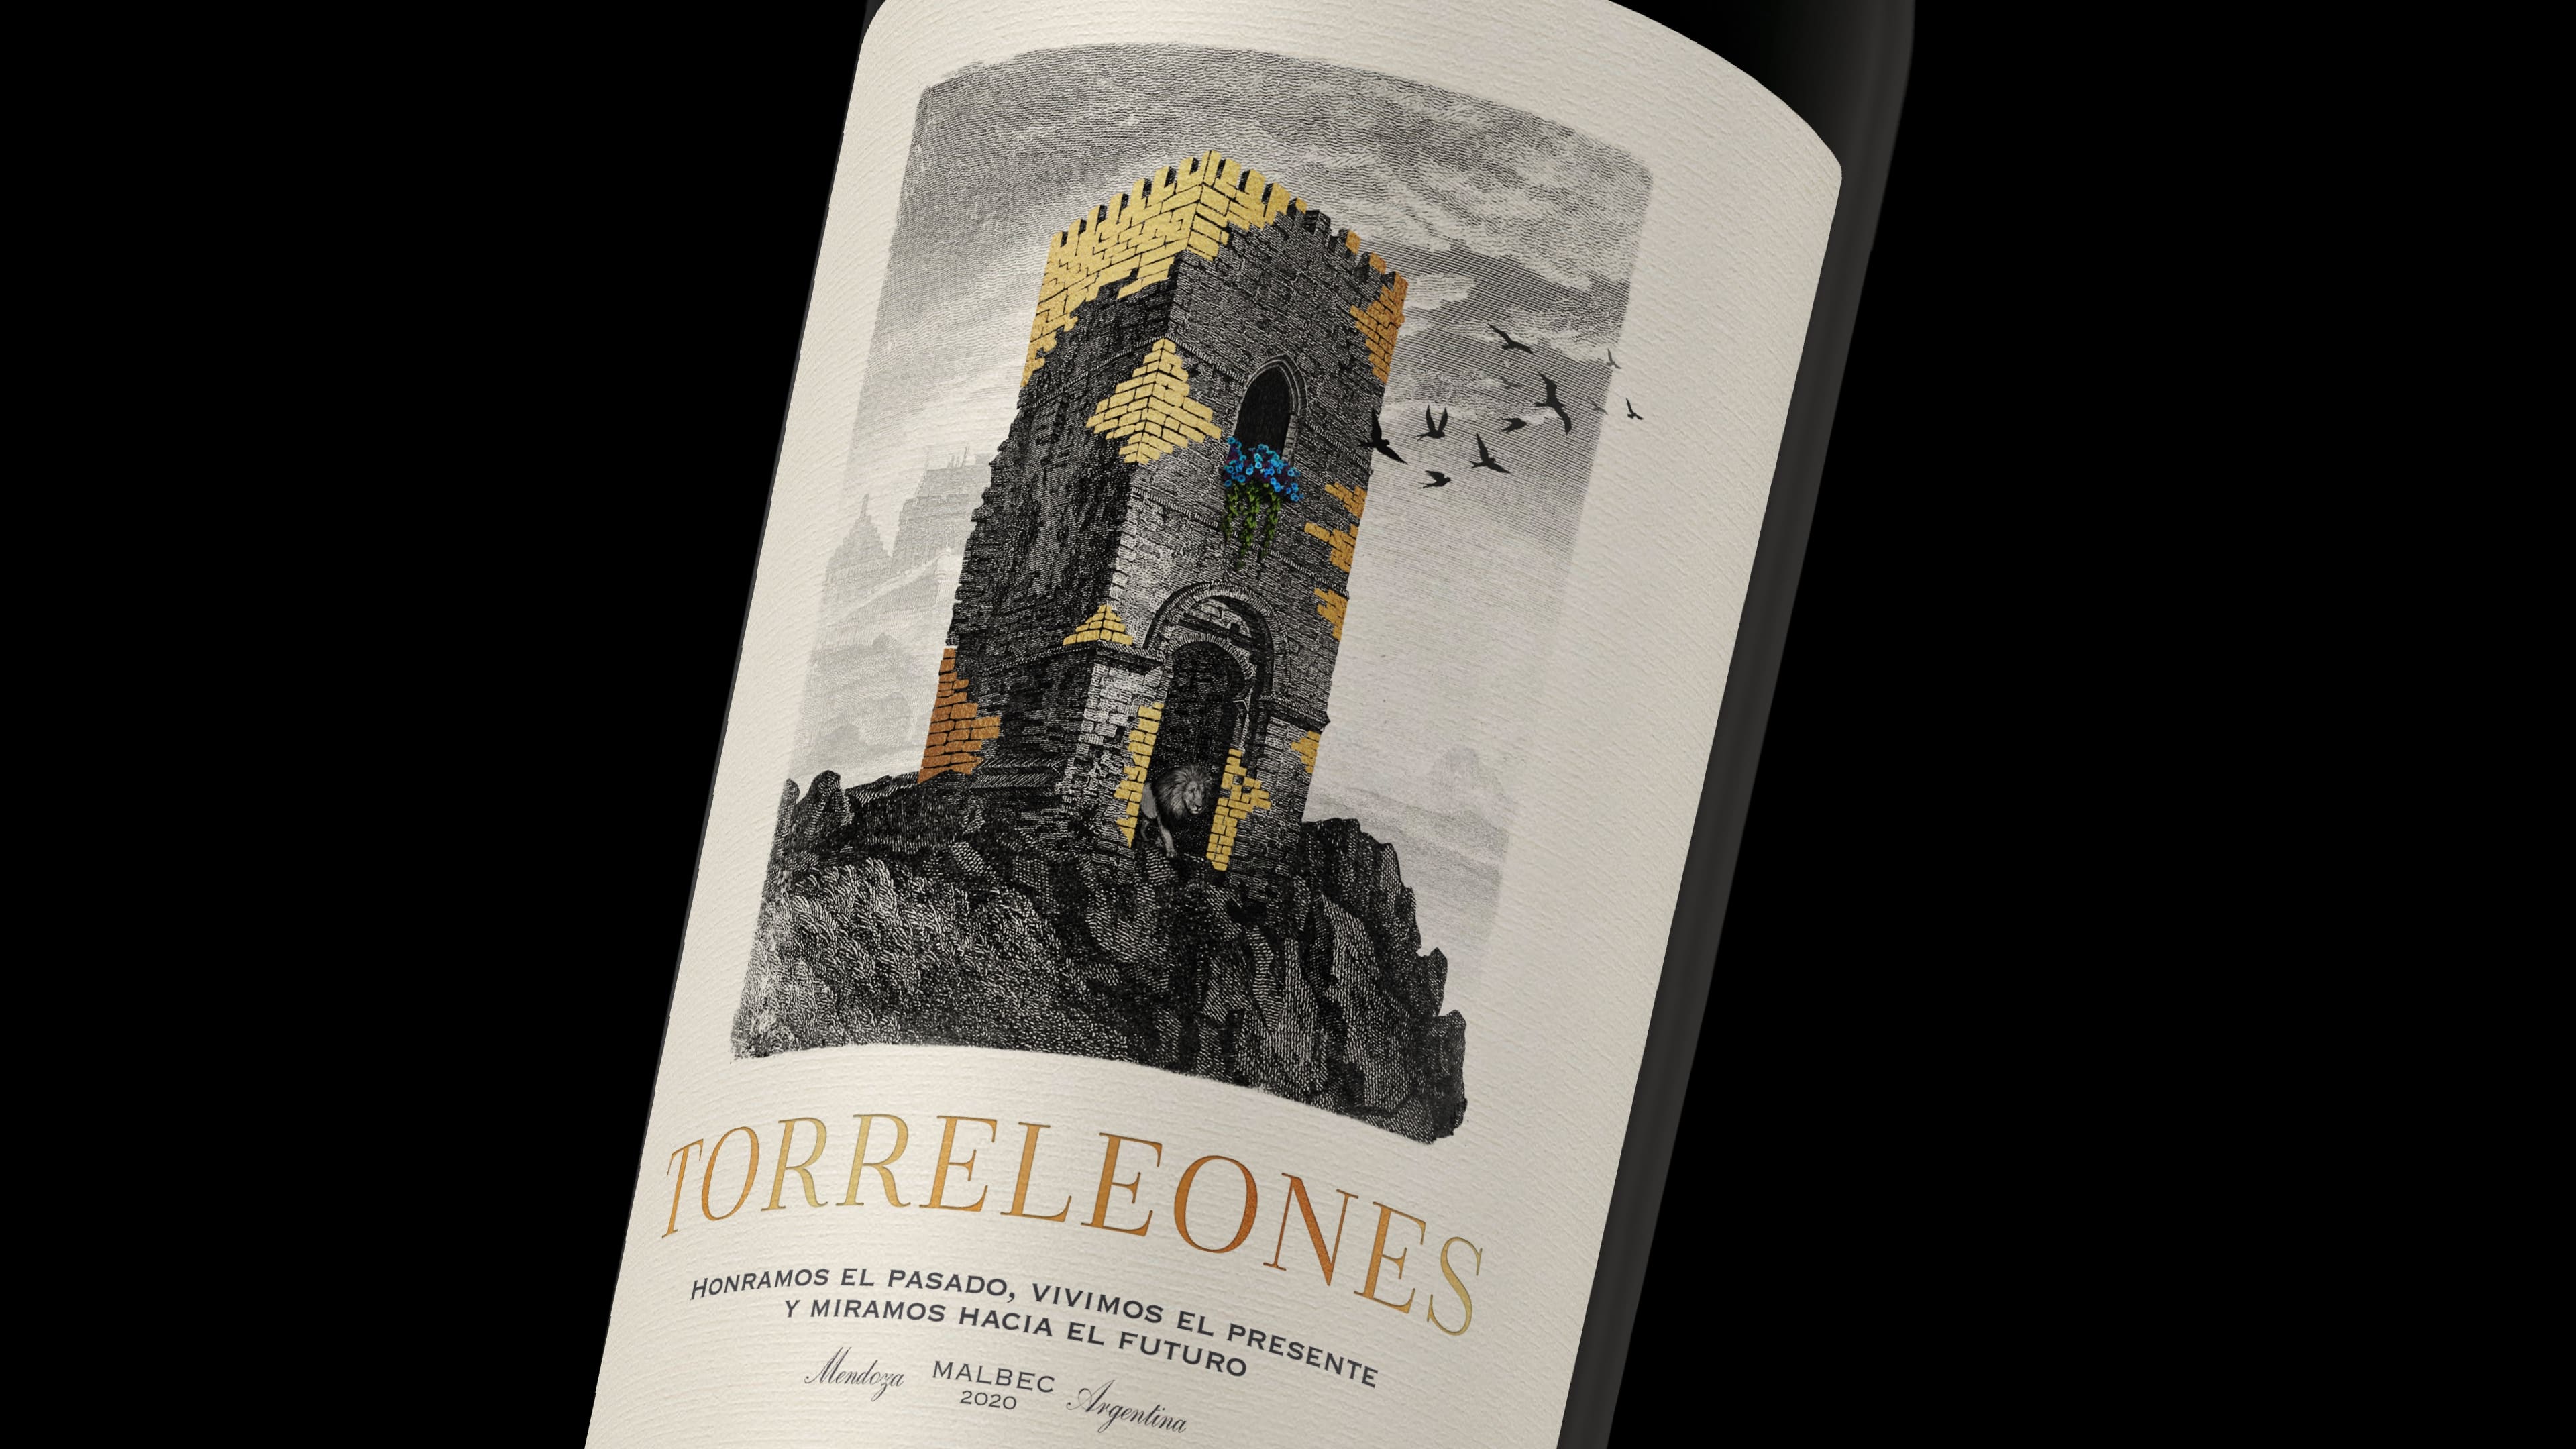 New Vintage Aesthetic for Torreleones Winery